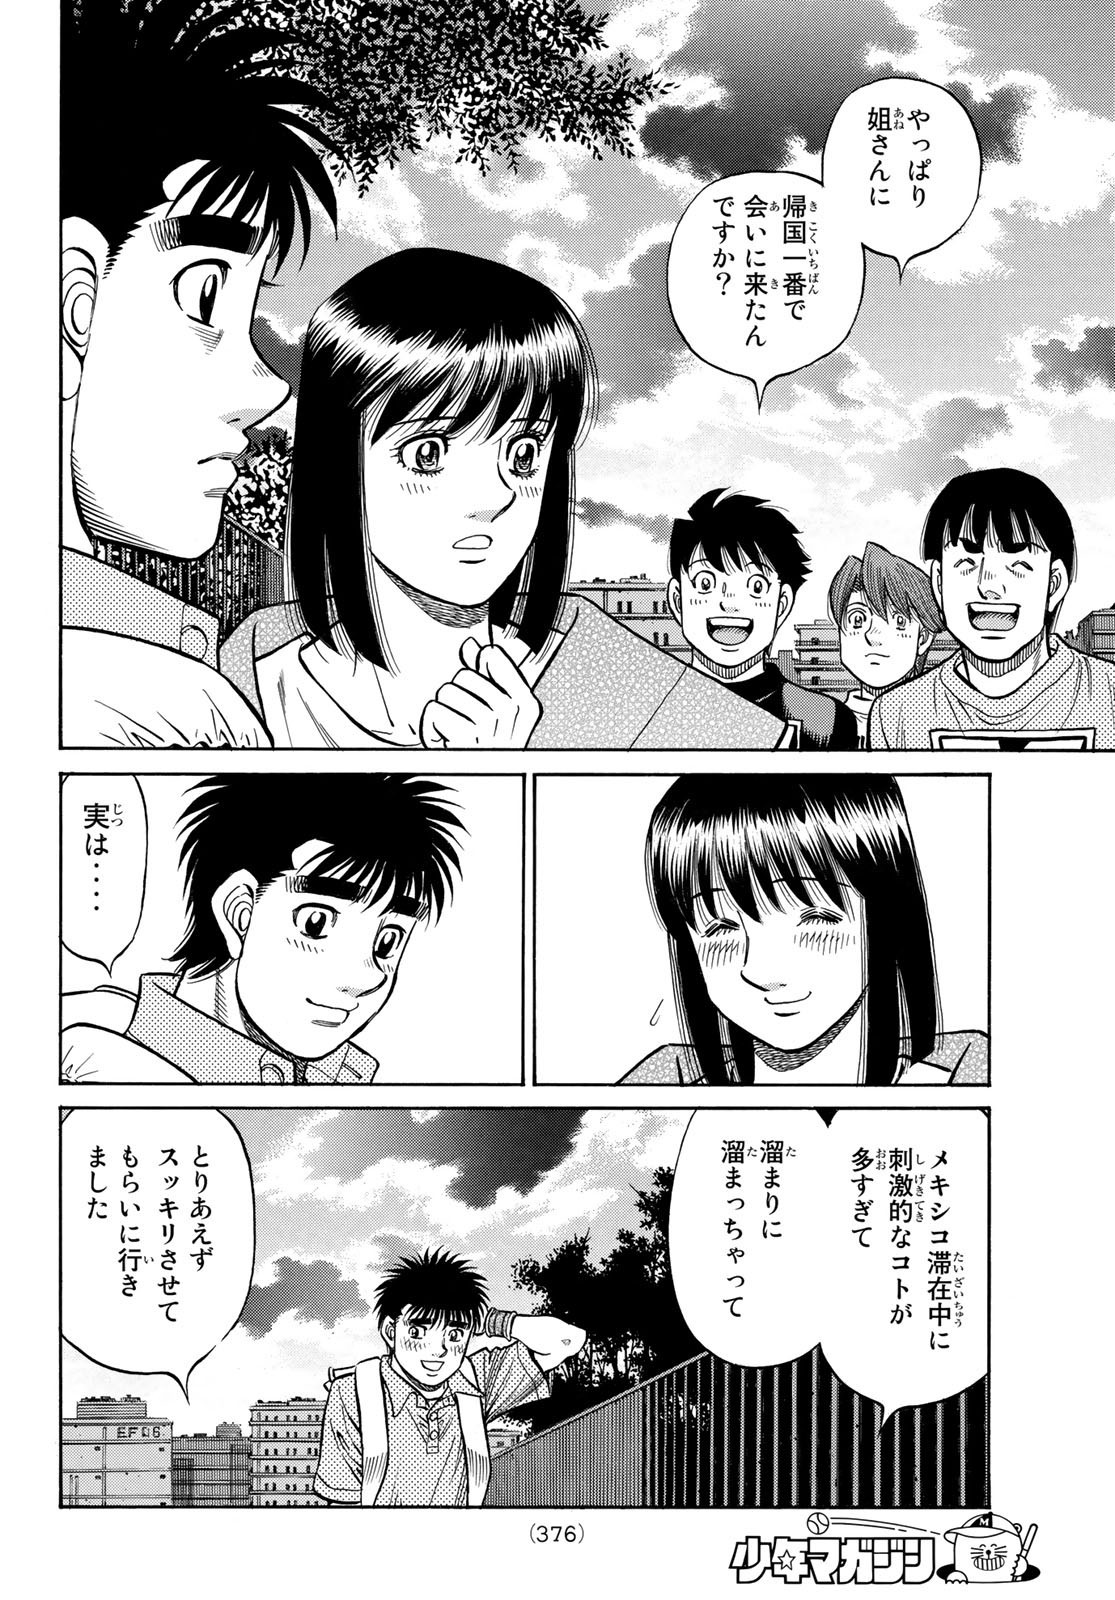 Hajime no Ippo - Chapter 1414 - Page 2